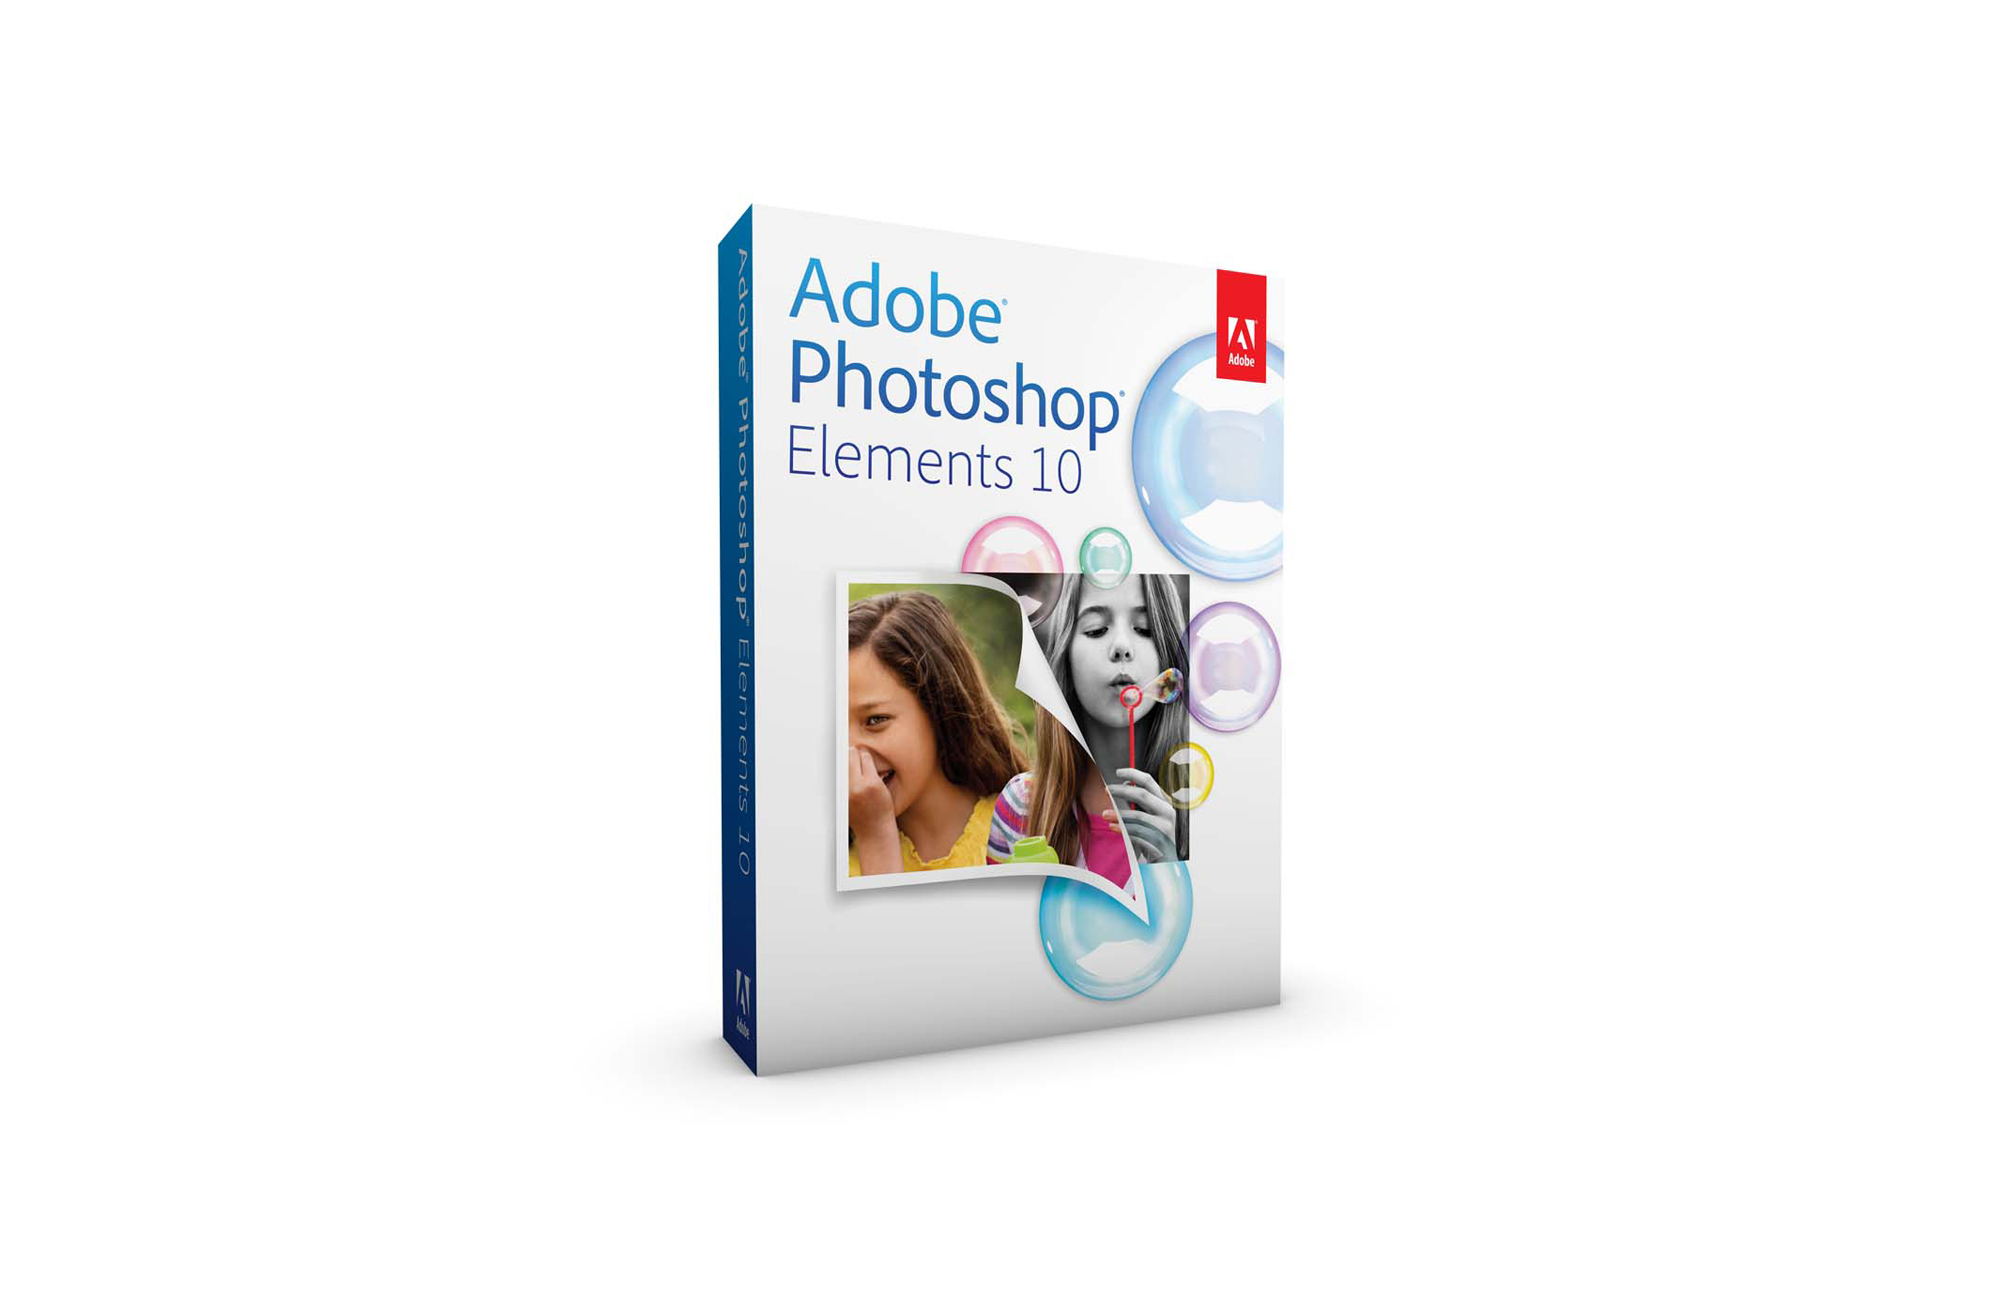 Adobe Photoshop Elements 10 Install